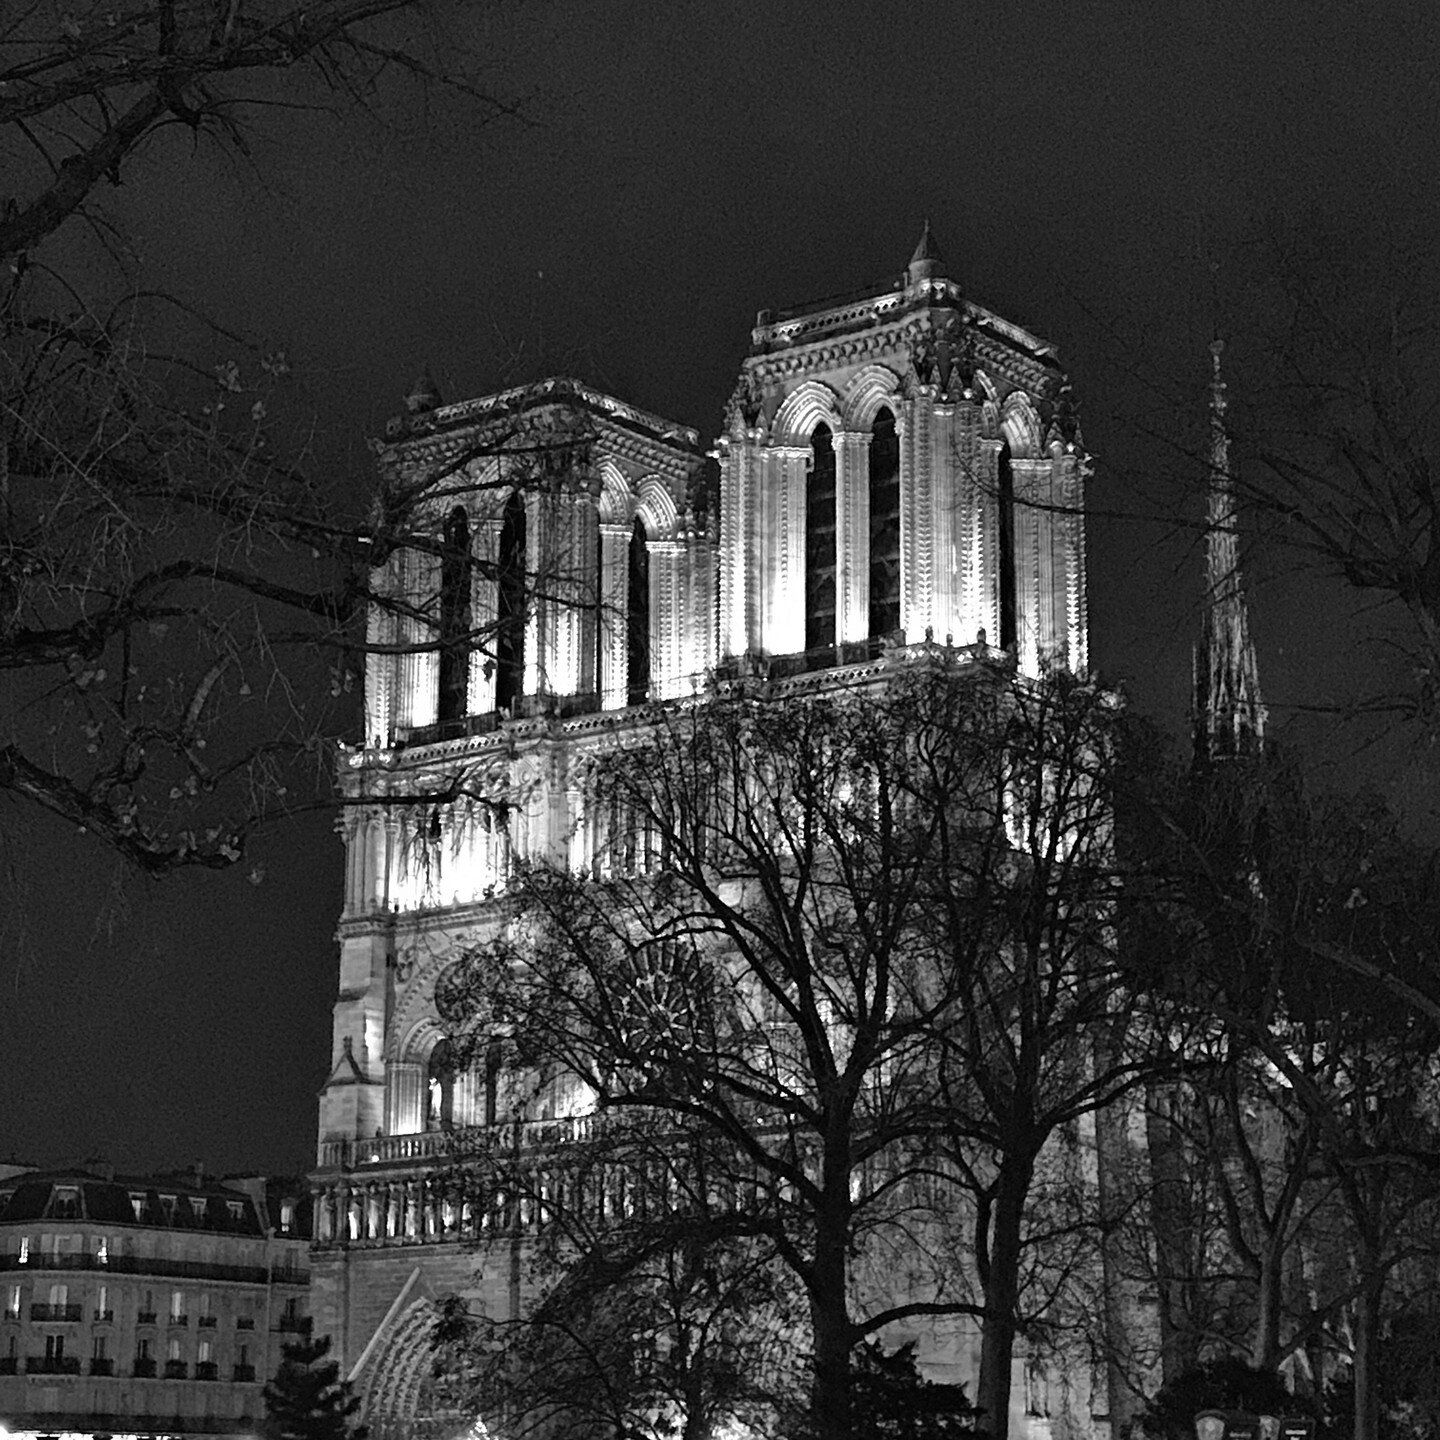 Notre Dame at night, December 2016. #notredameparis #paris #parisisalwaysagoodidea #parisjetaime